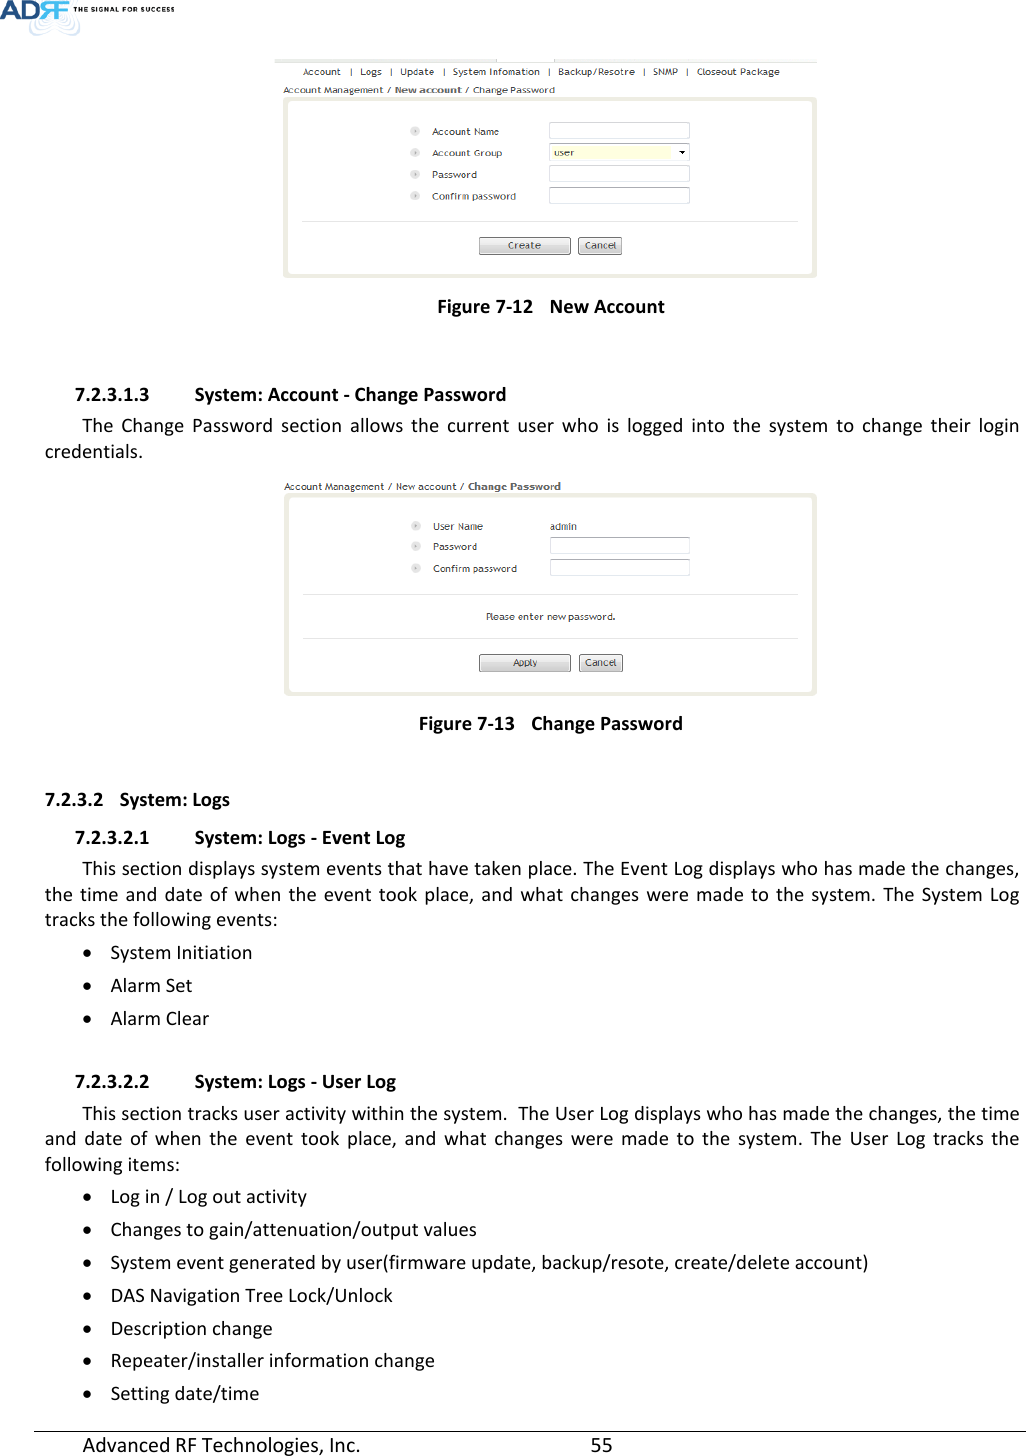 Page 55 of ADRF KOREA ADXV-R-336 DAS (Distributed Antenna System) User Manual ADXV DAS